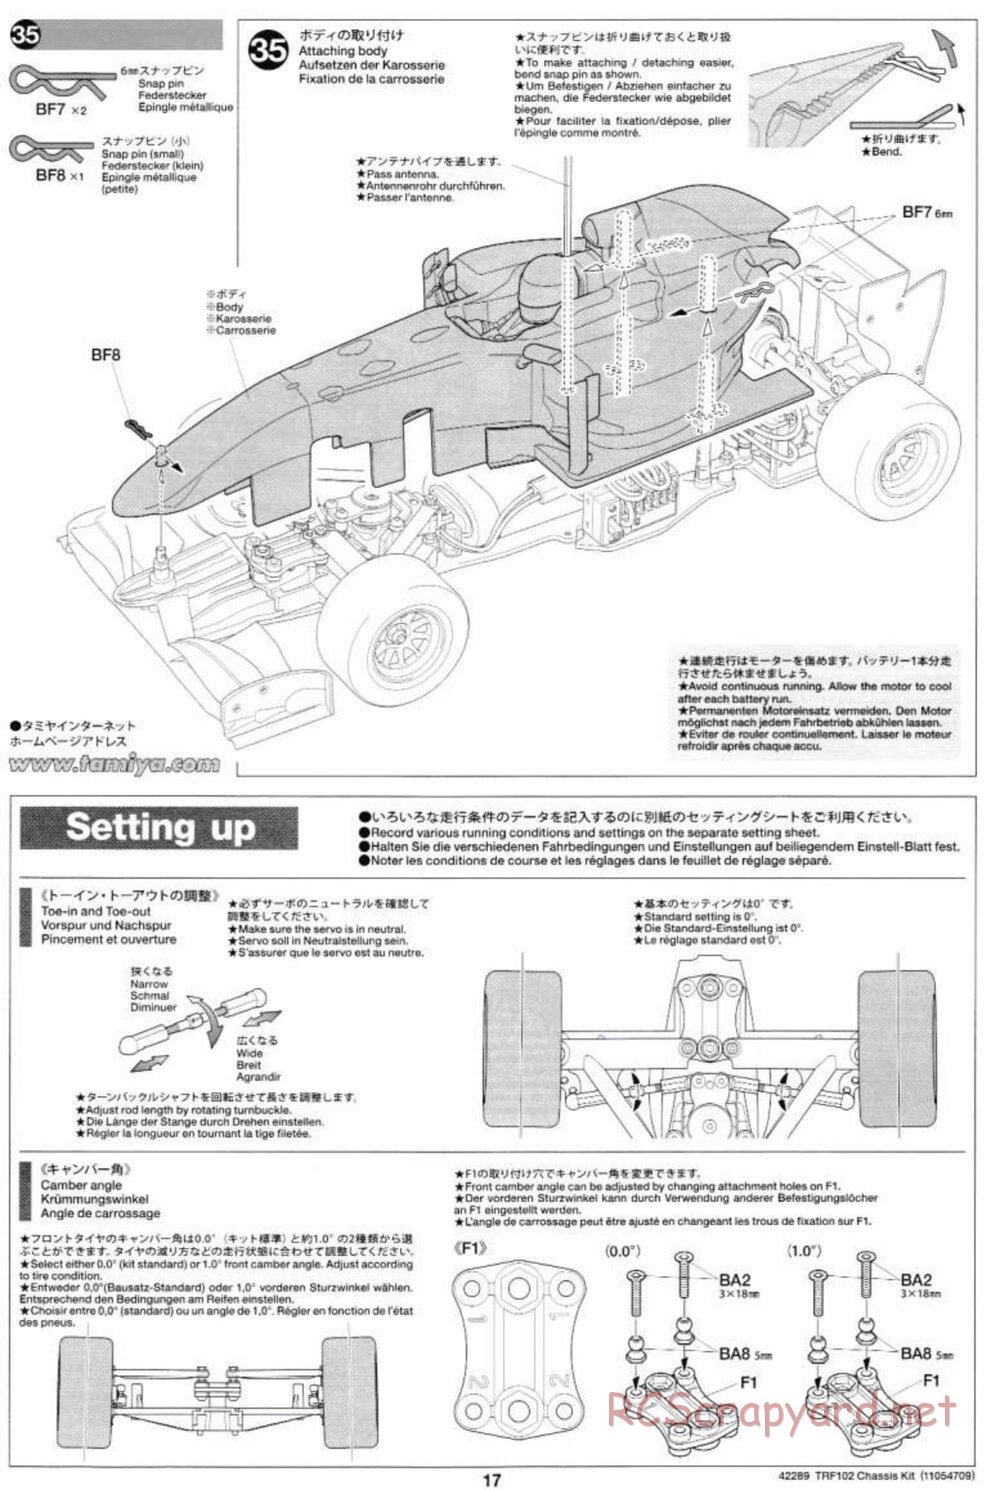 Tamiya - TRF102 Chassis - Manual - Page 17